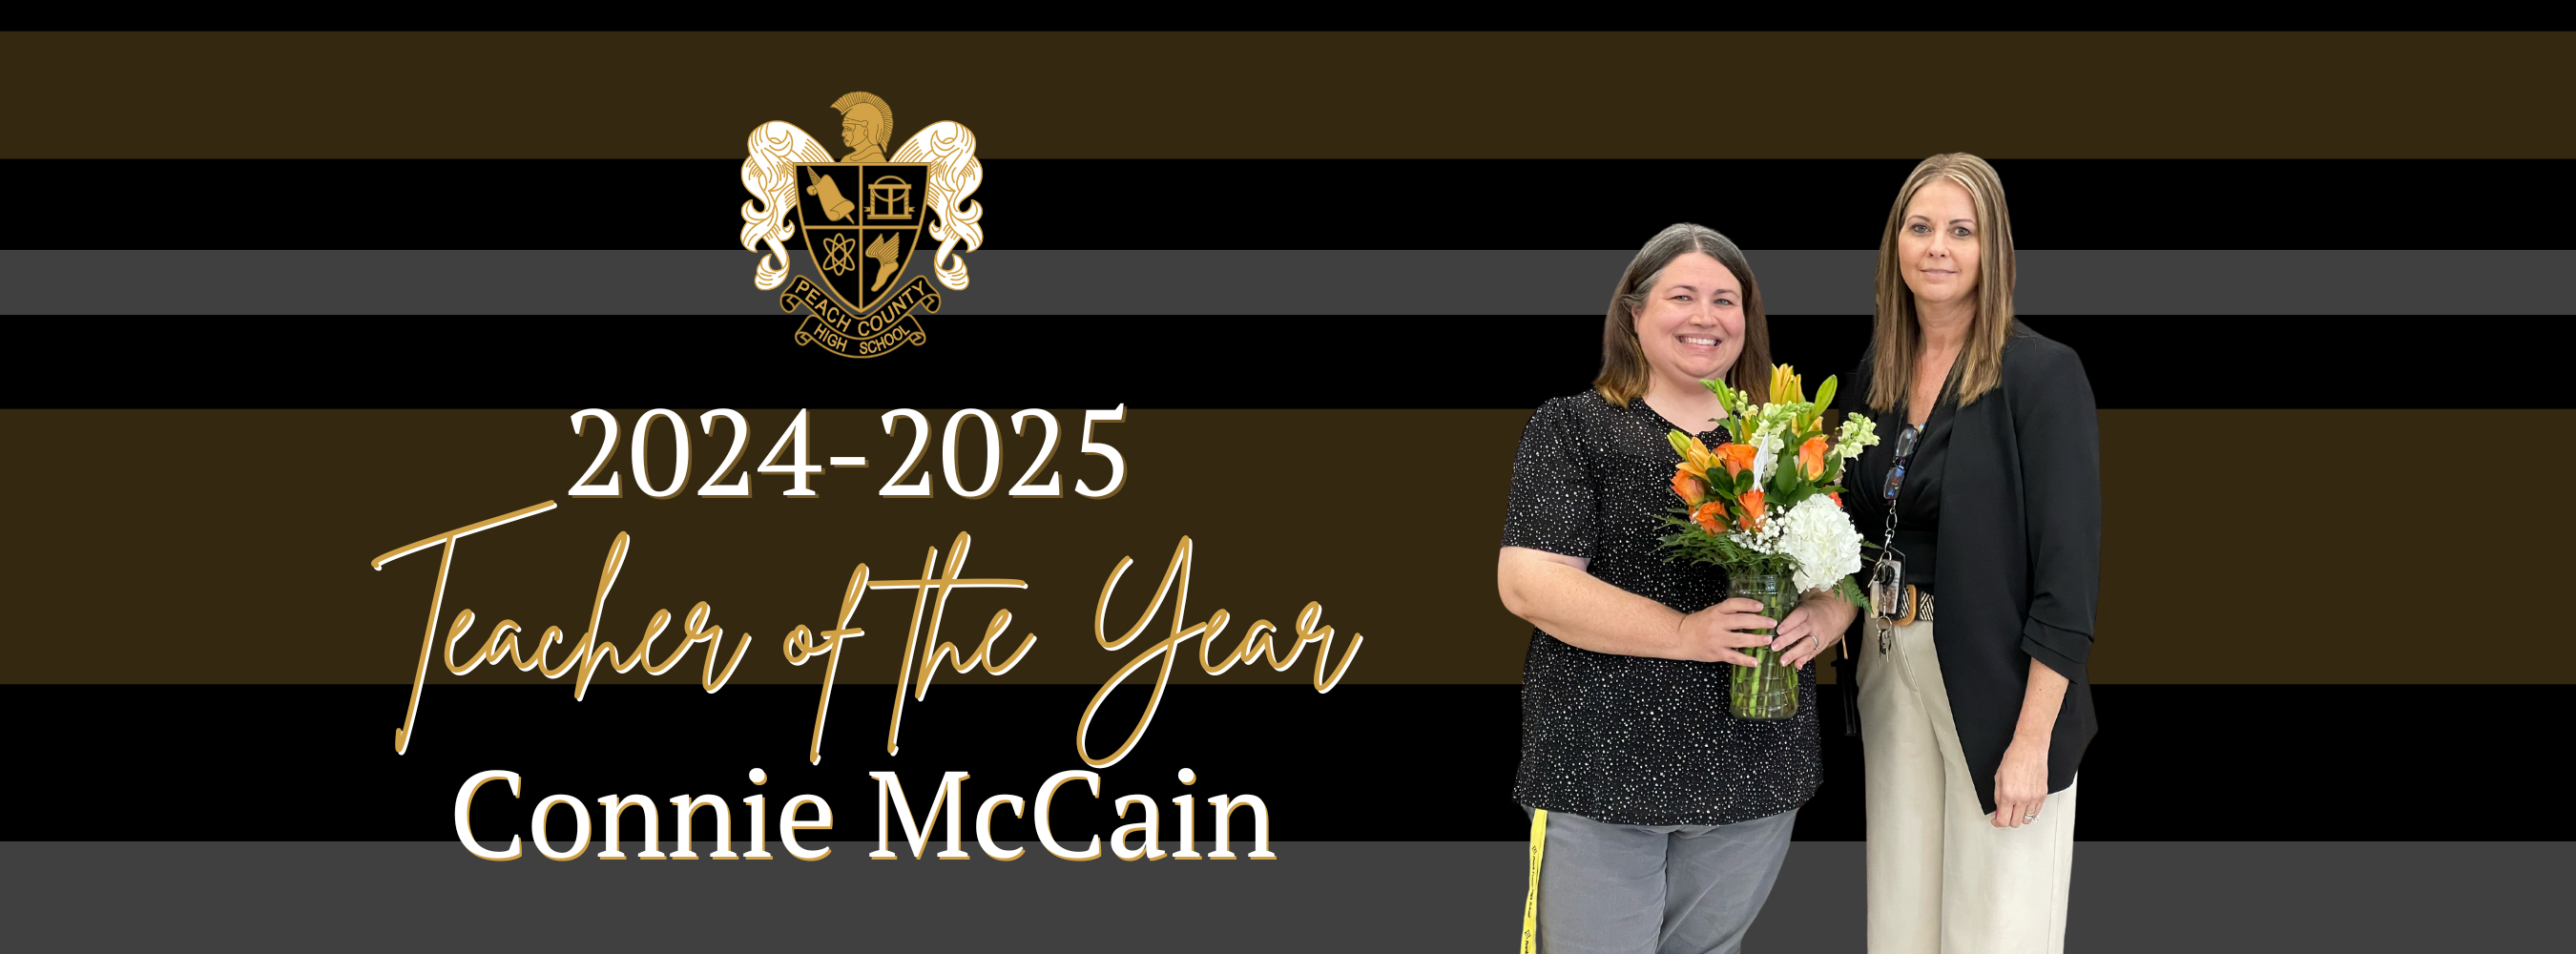 2024-2025 Teacher of the Year - Connie McCain